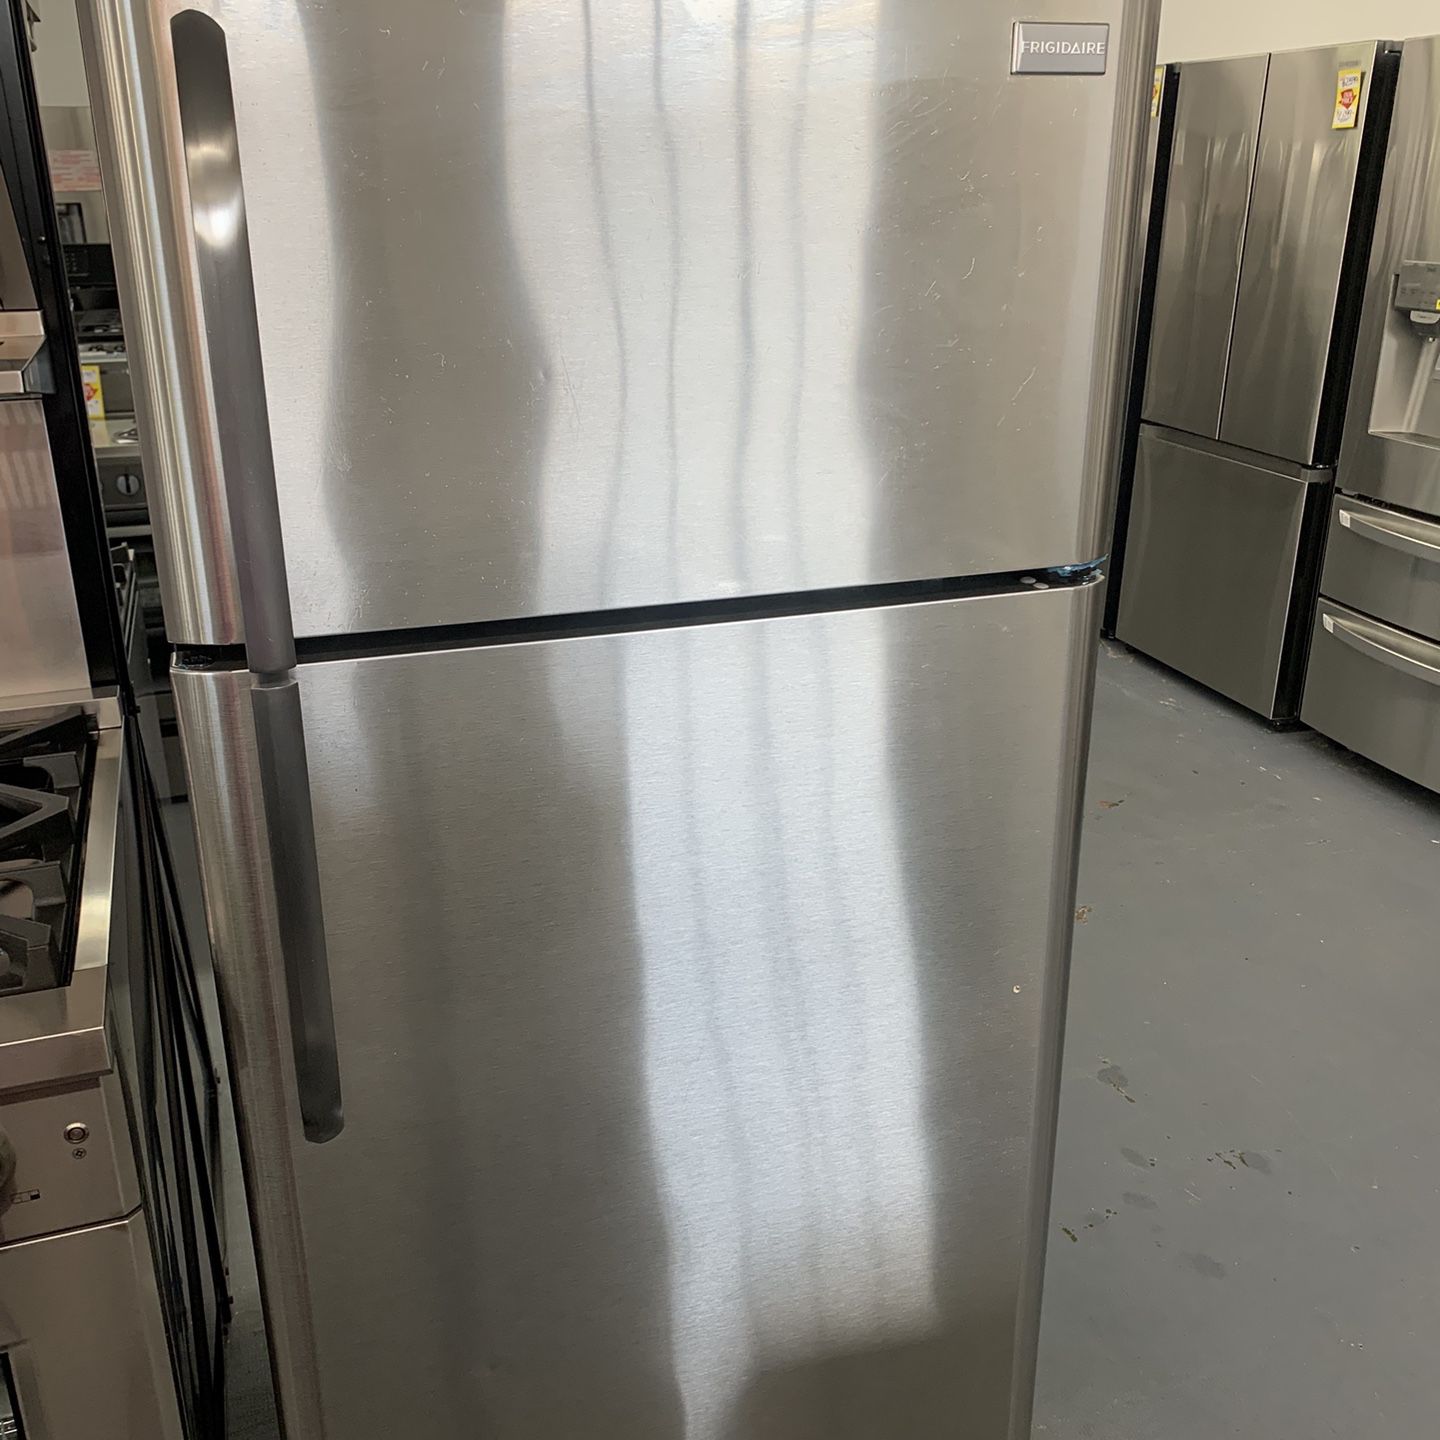 Used top stainles steel refrigerator $450